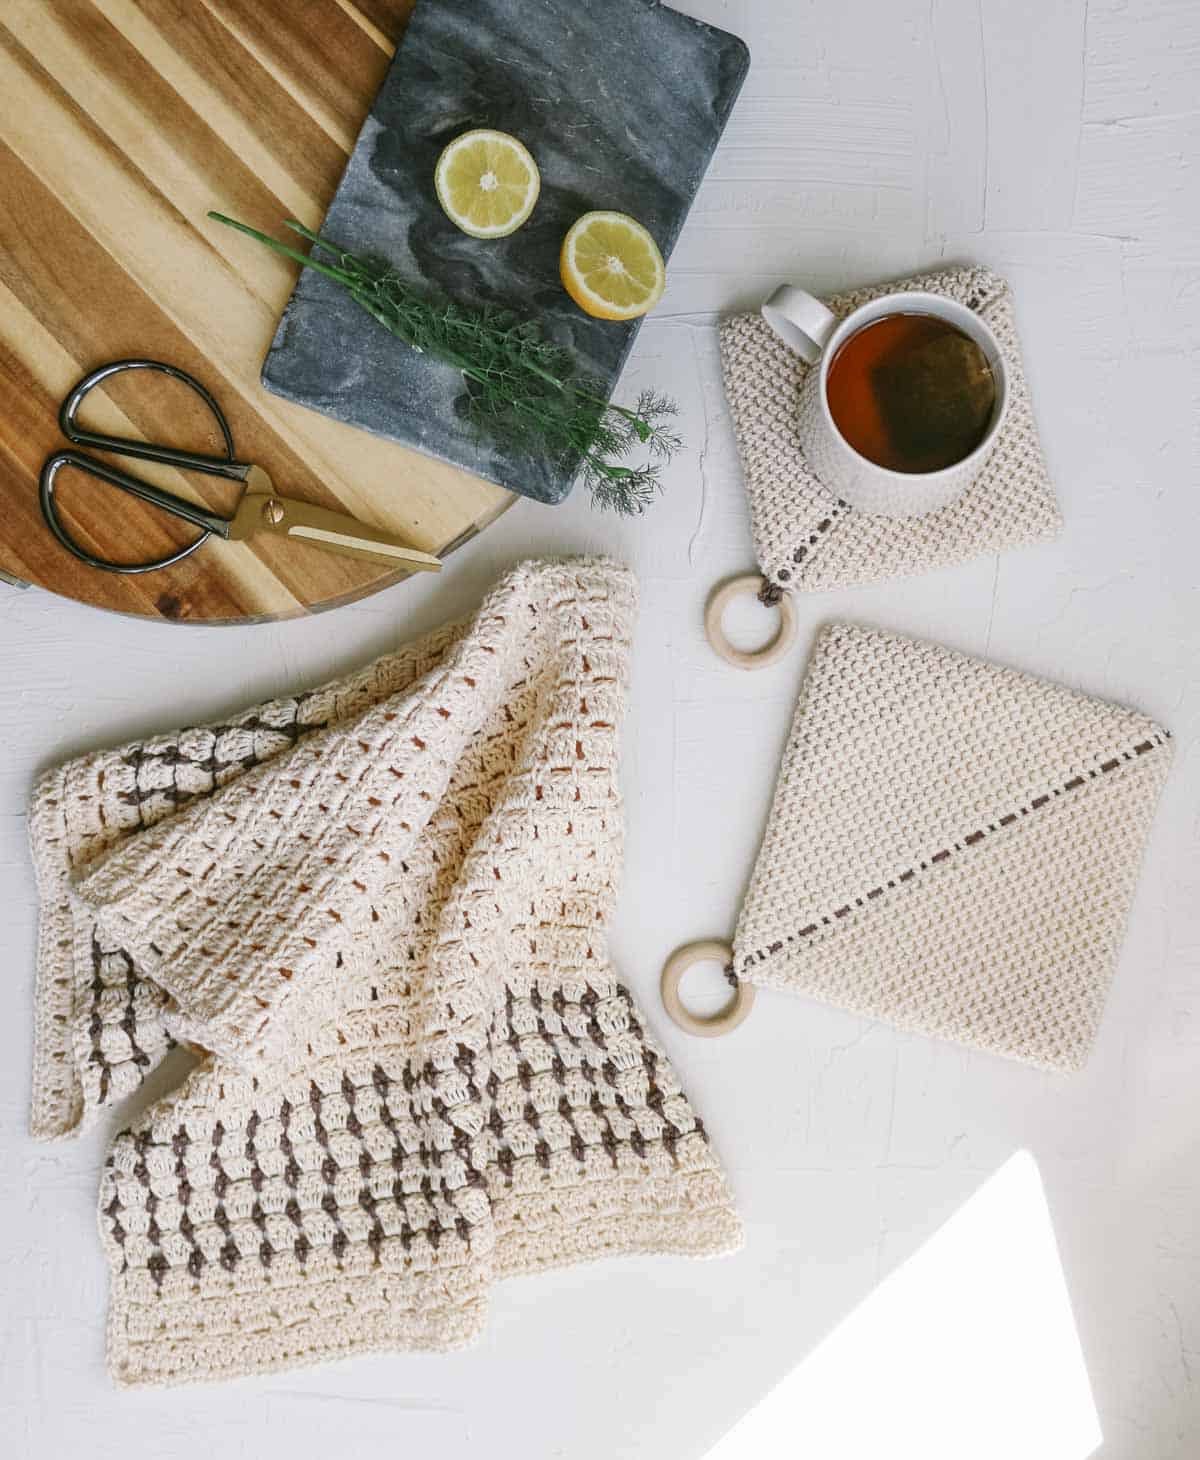 Crochet hand towel and pot holders.